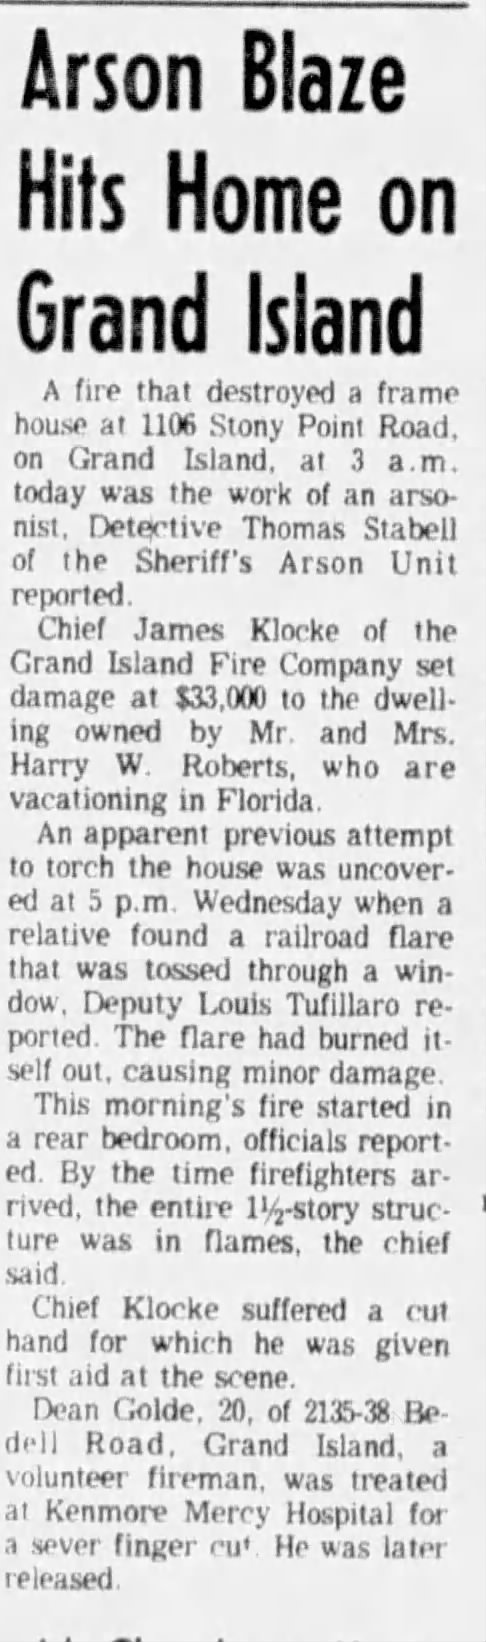 Arson Blaze Hits Home on Grand Island